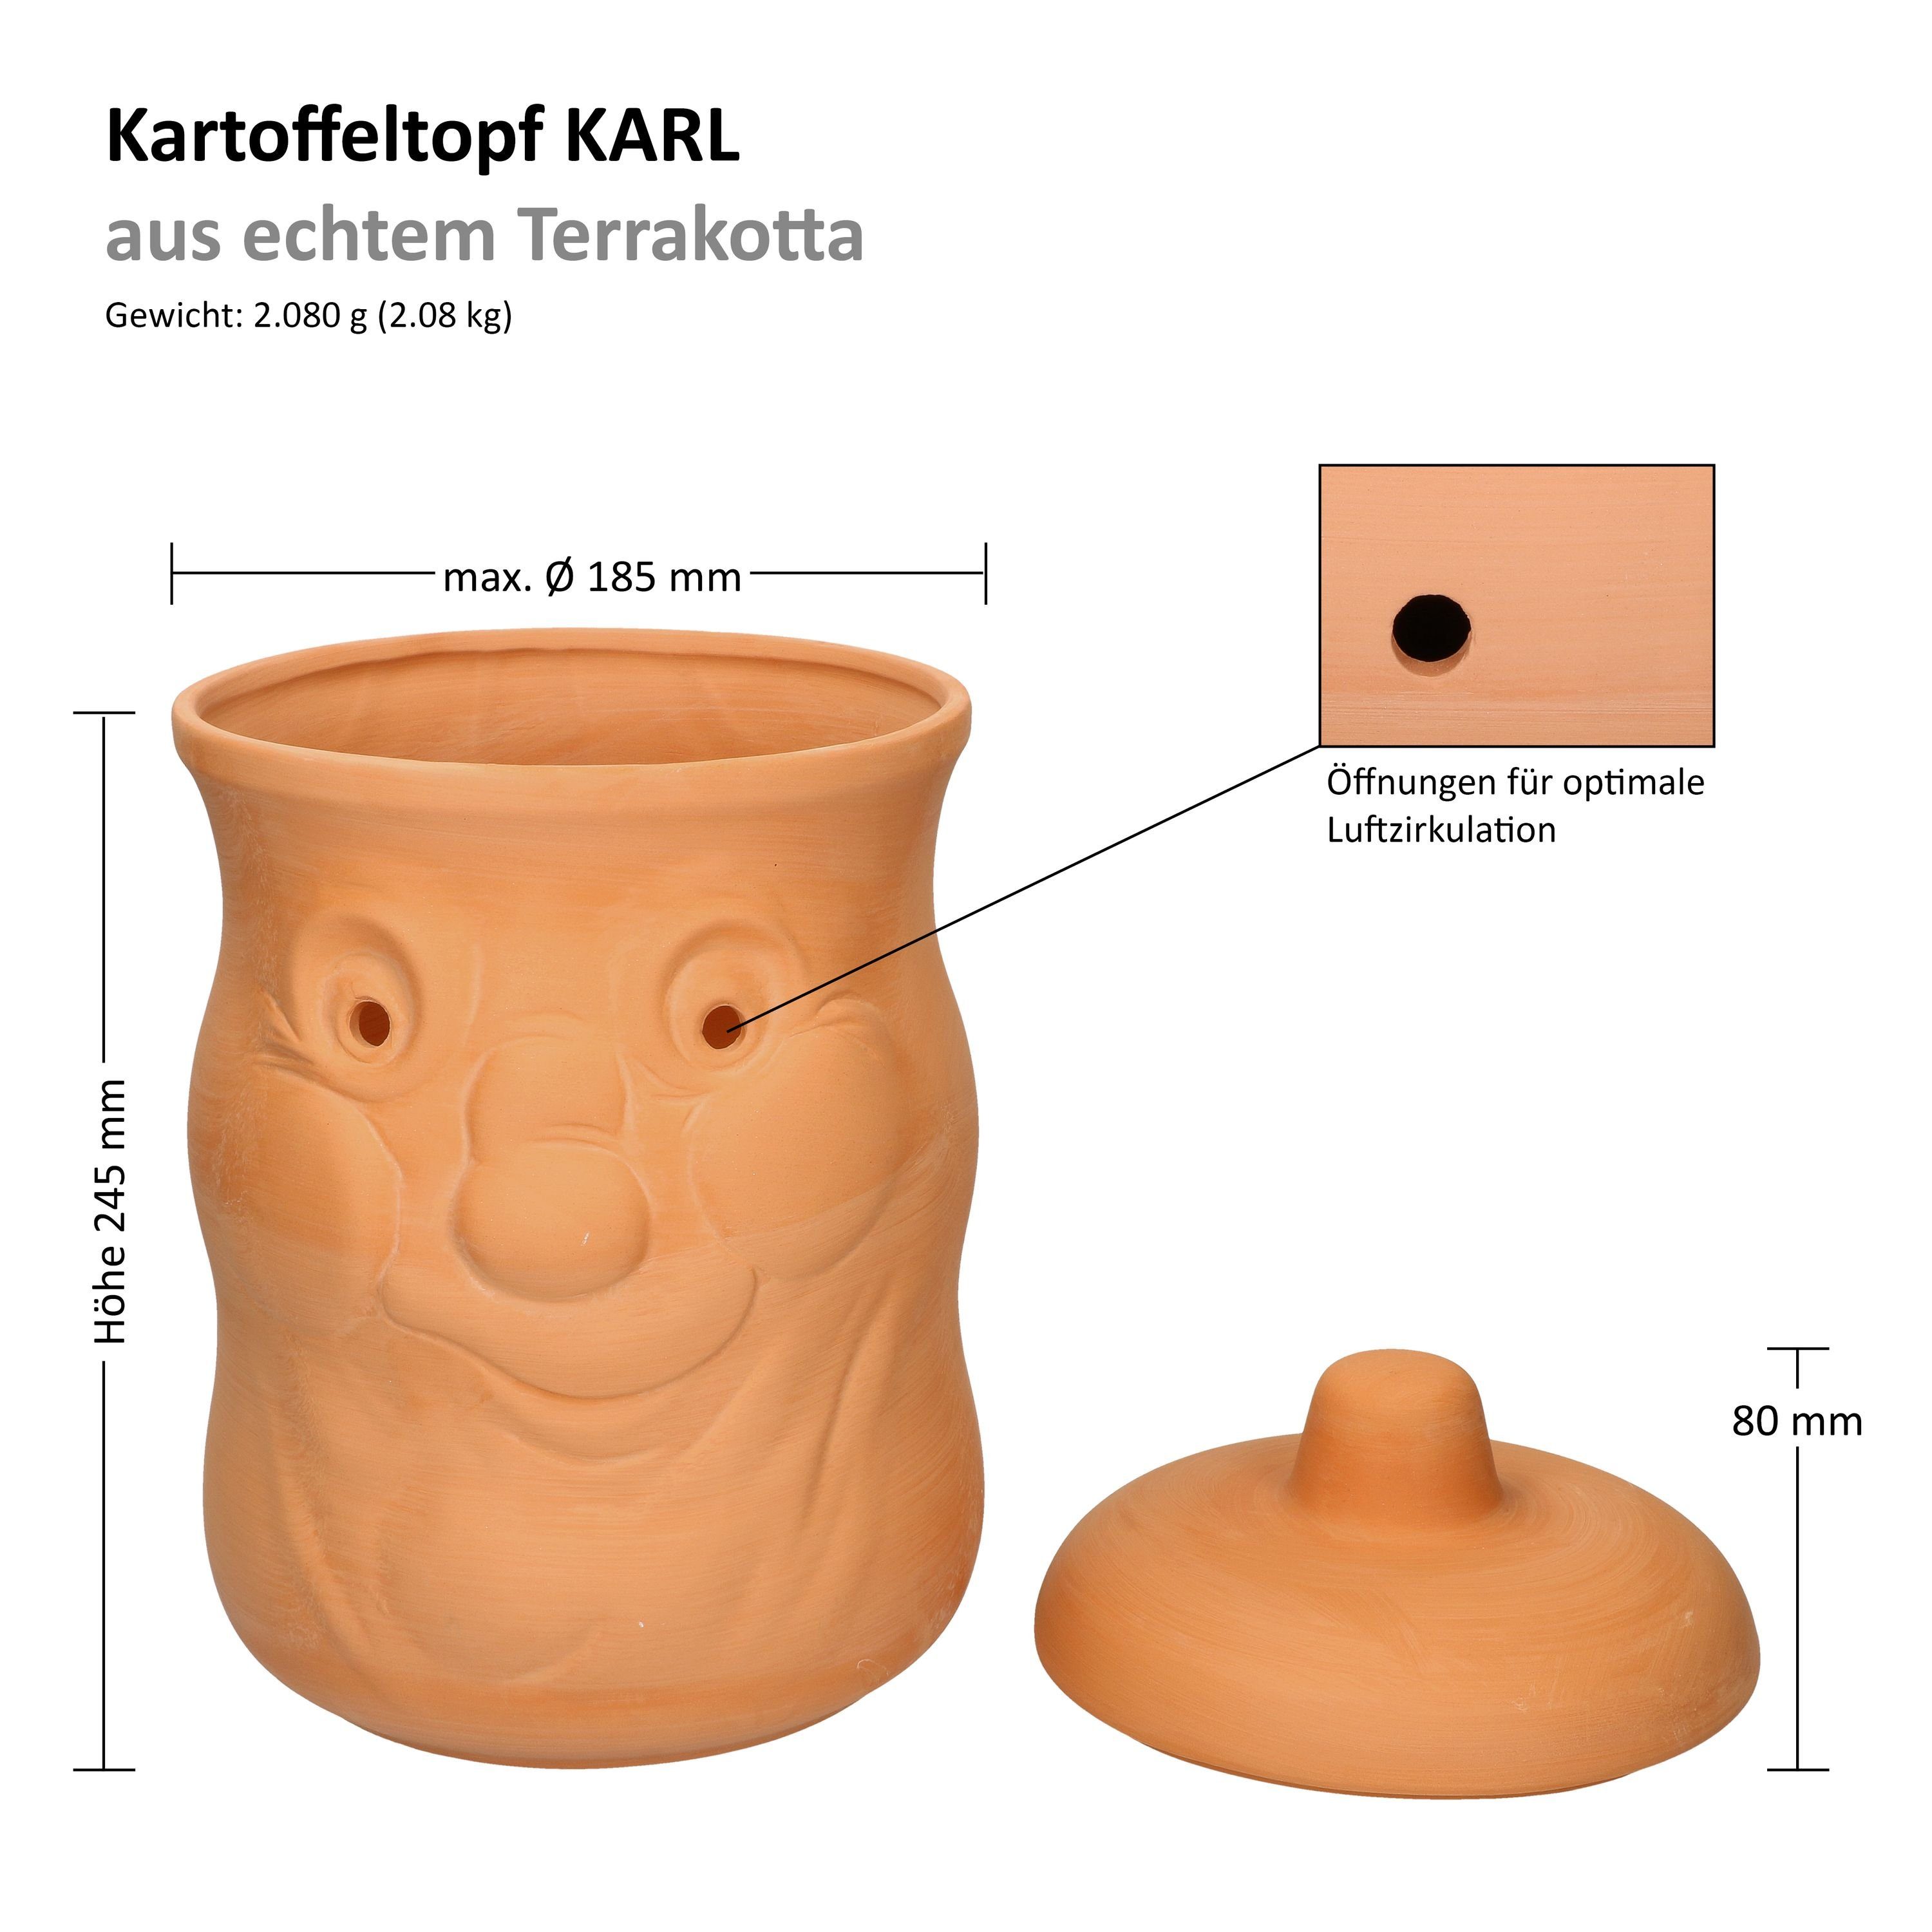 MamboCat Vorratsglas Steingut Terrakotta, Kartoffeltopf Karl